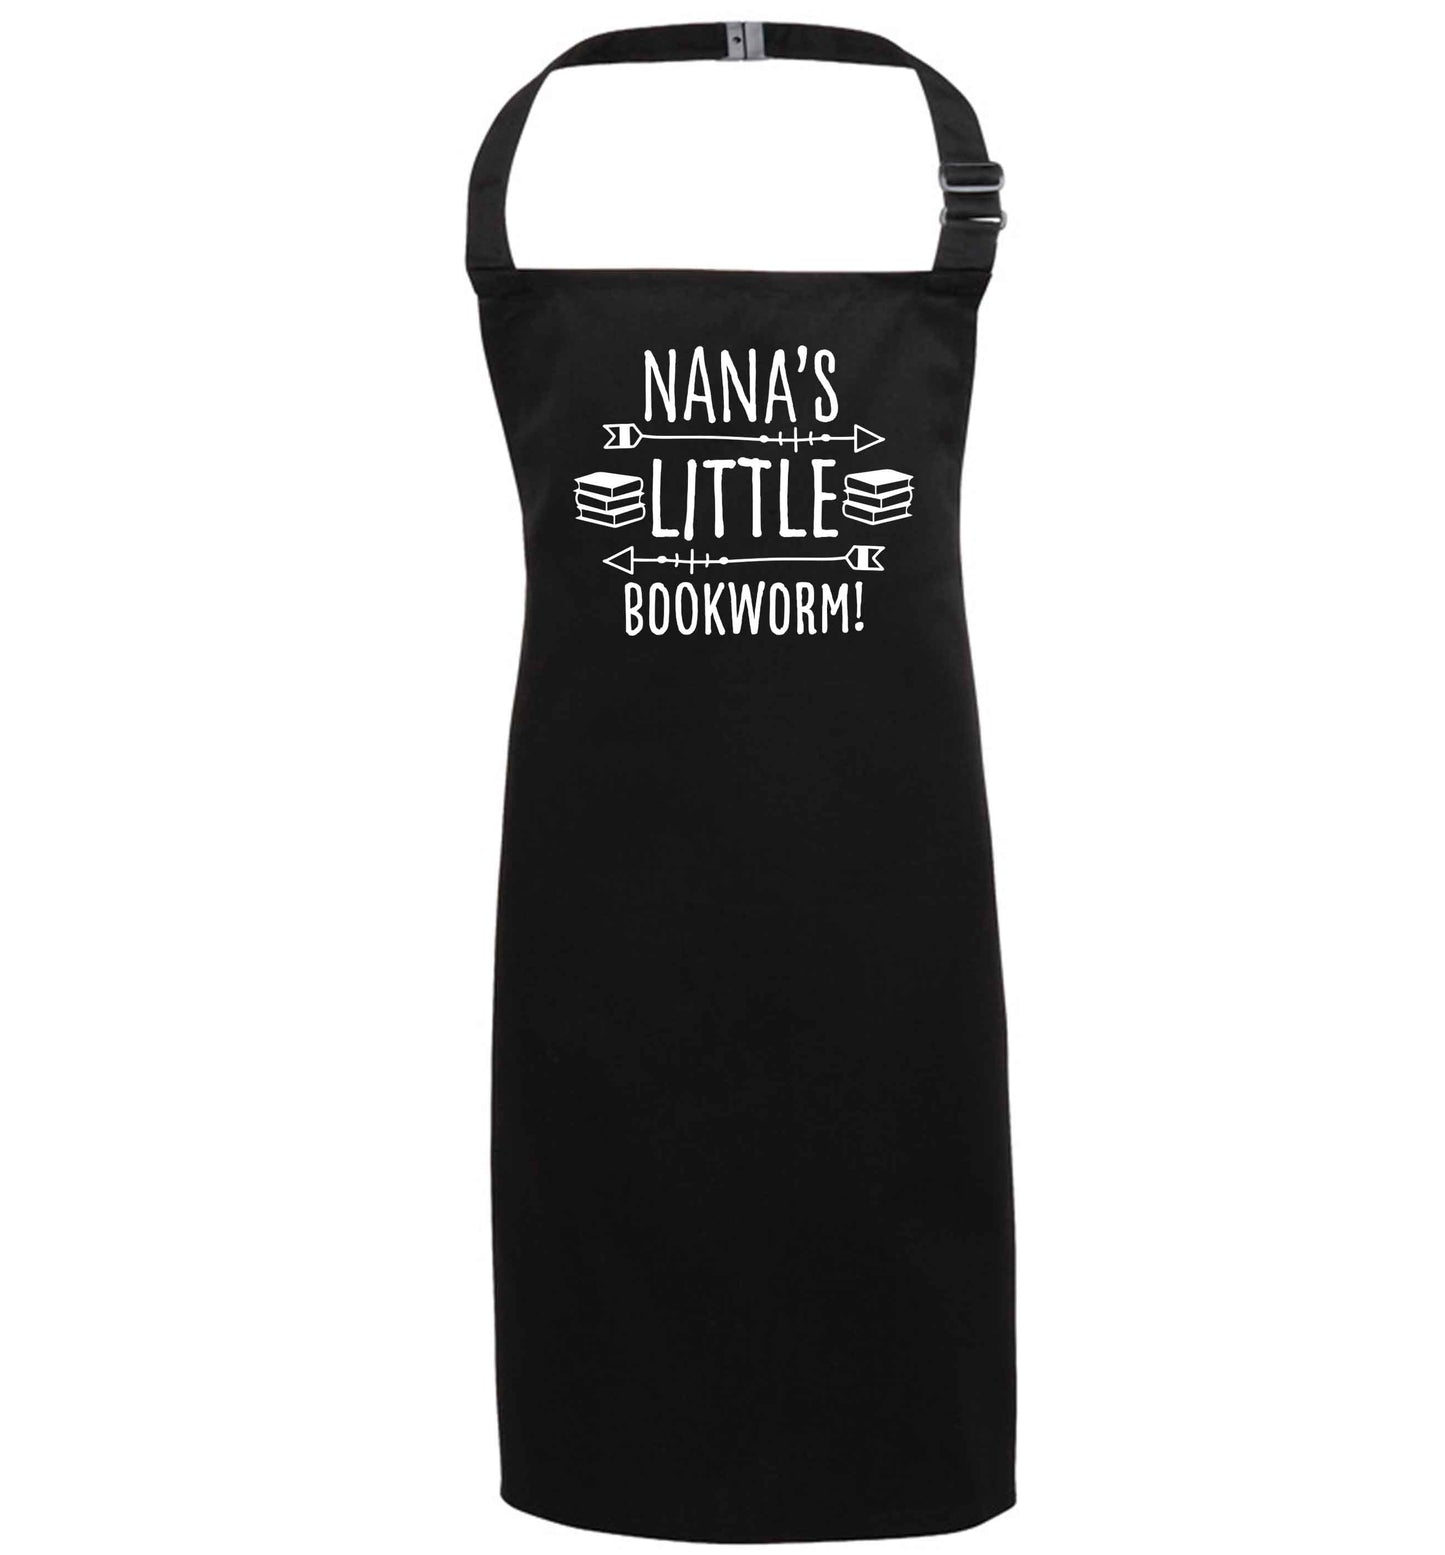 Nana's little bookworm black apron 7-10 years